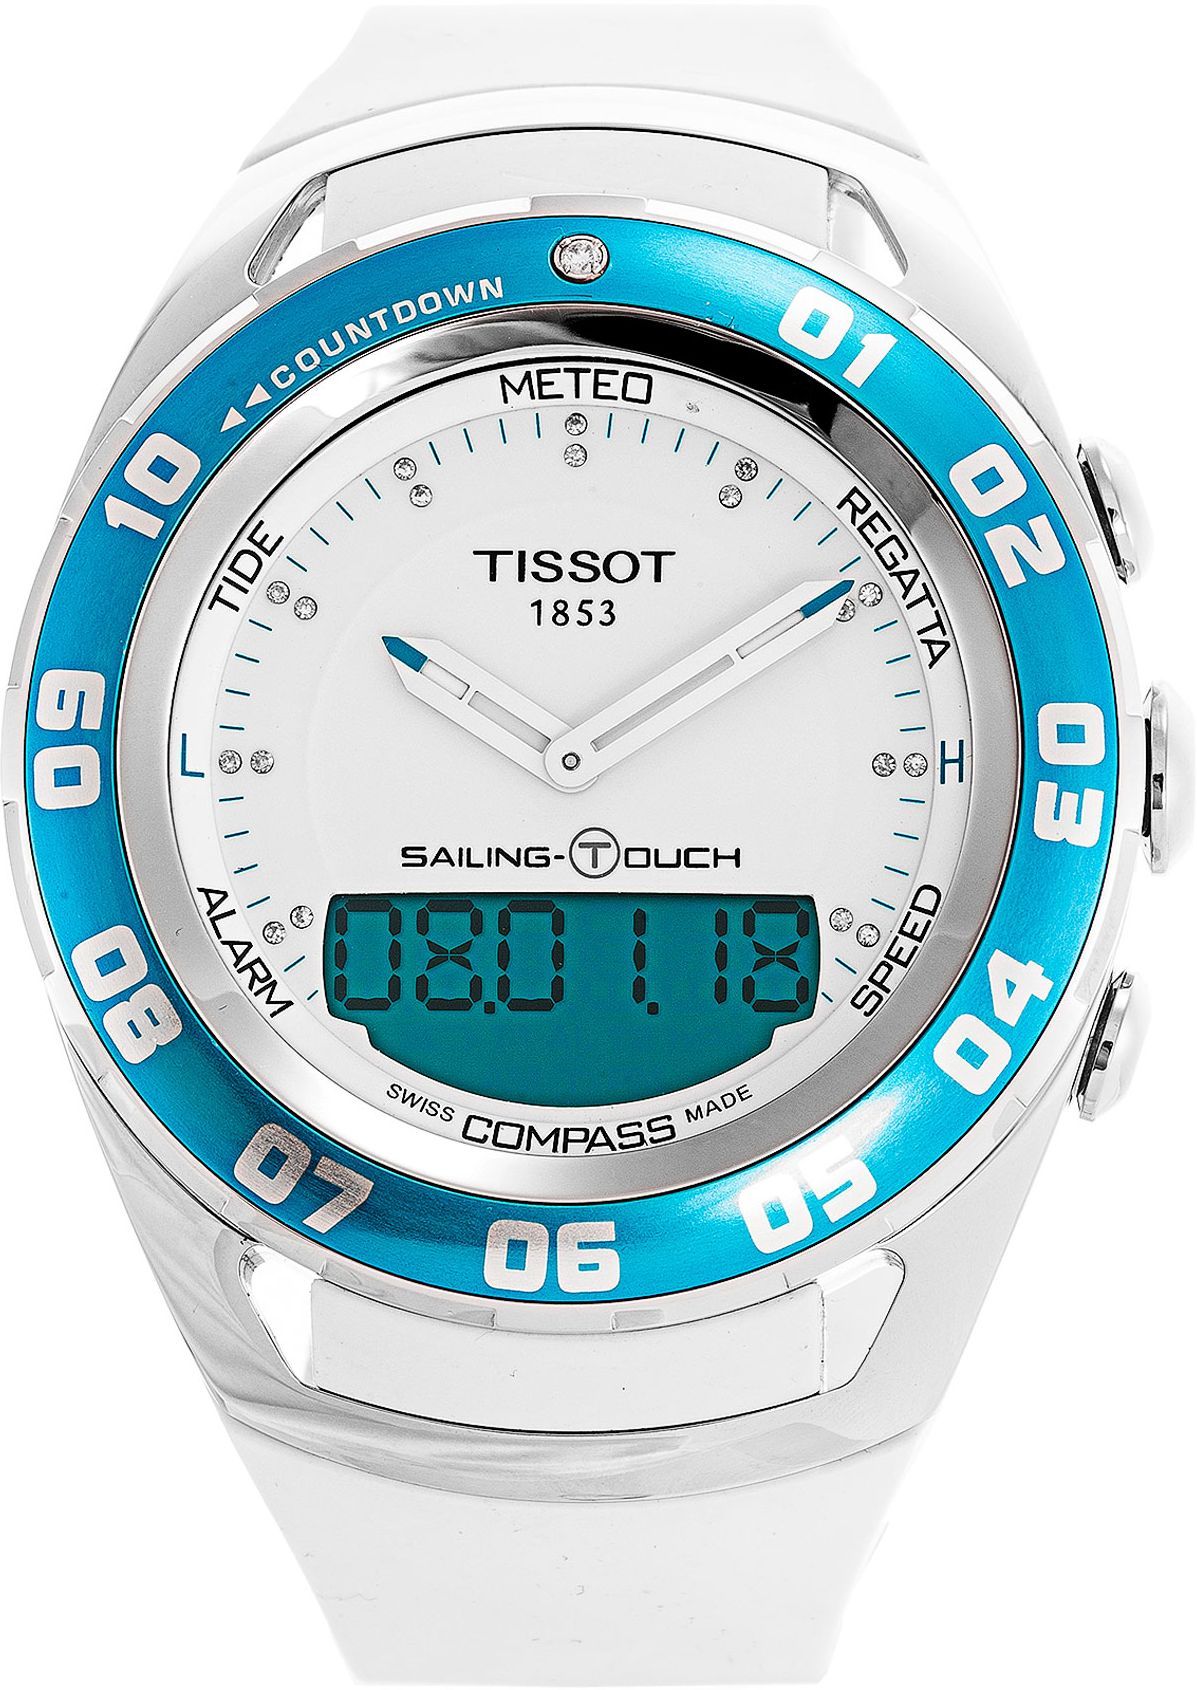 Tissot T-Touch Tissot Sailing-Touch White Dial 45 mm Quartz Watch For Unisex - 1